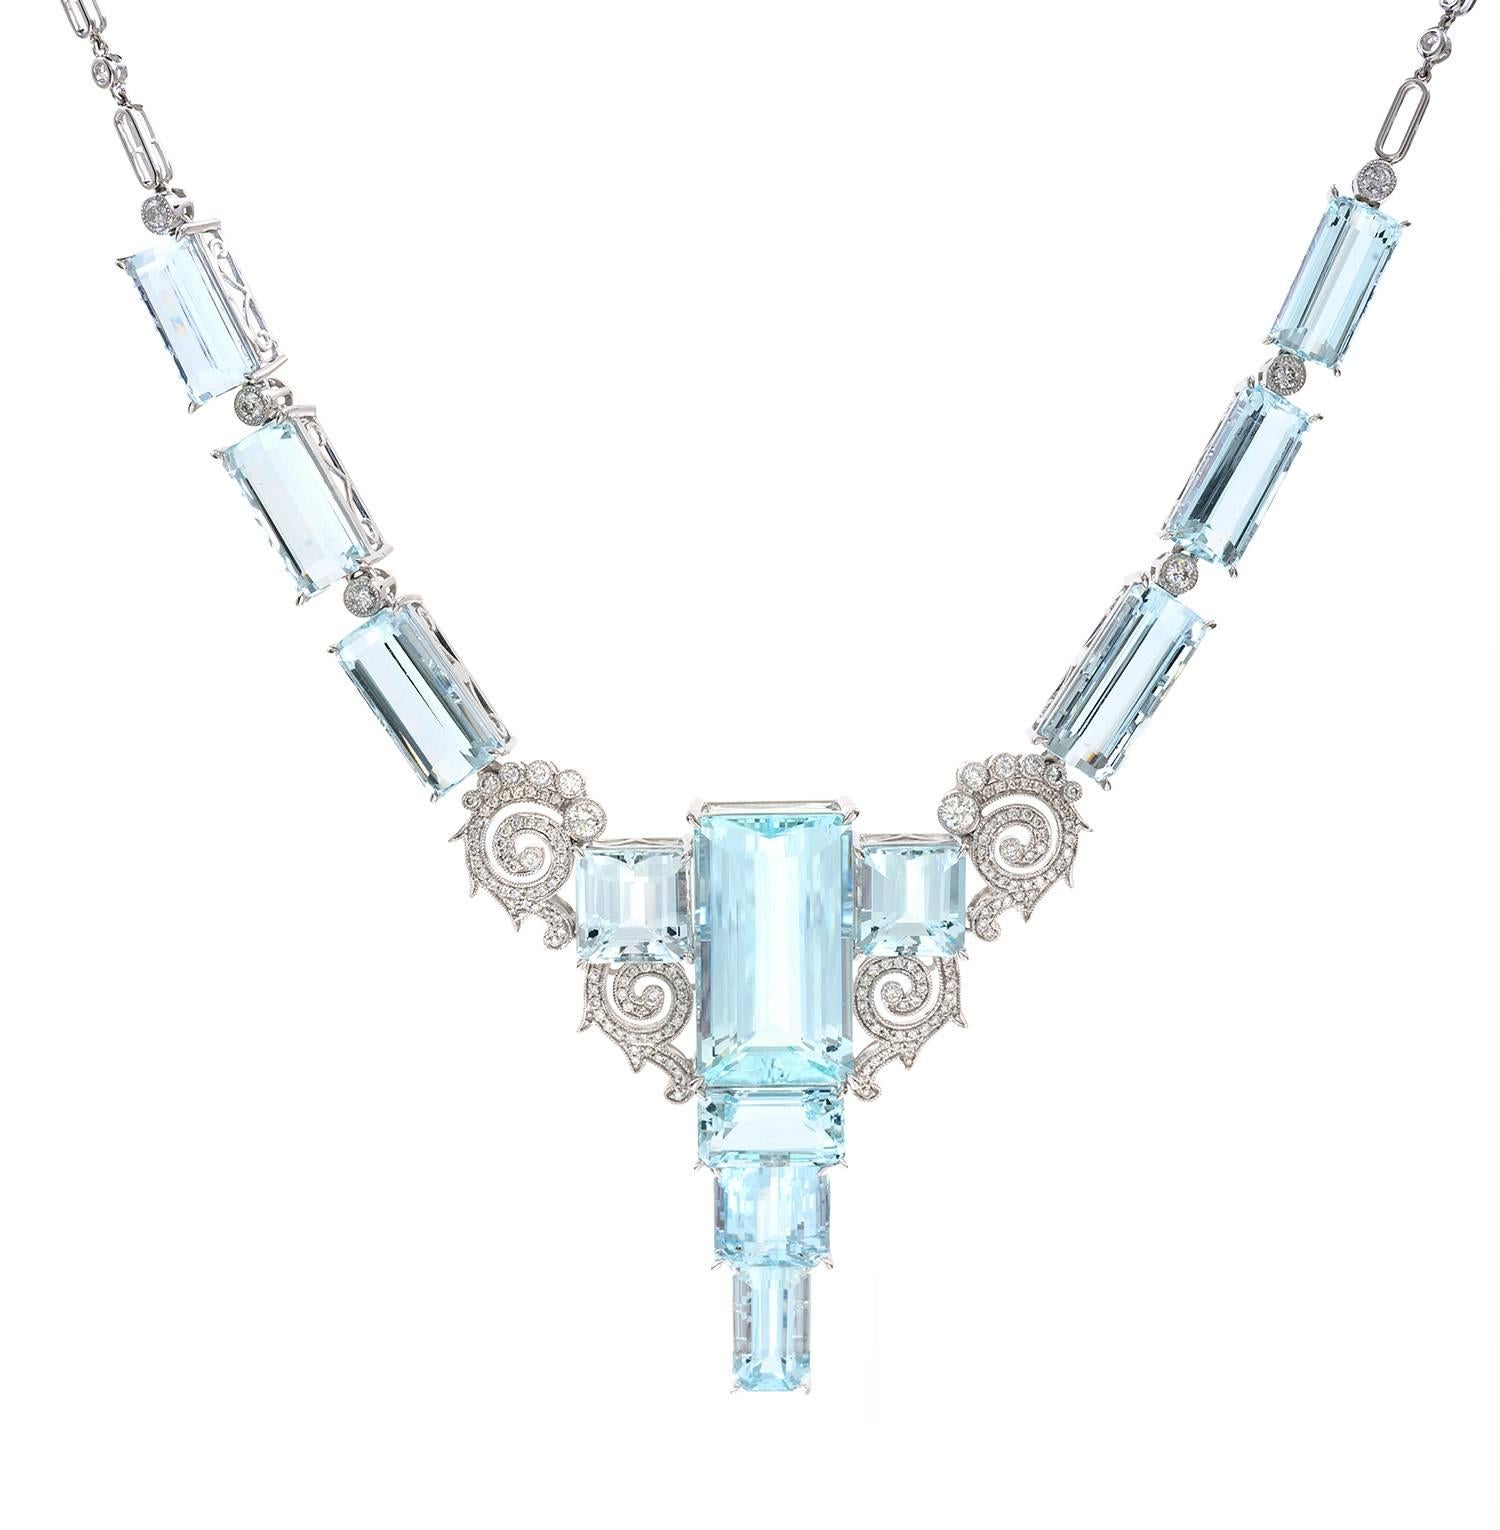 81.13 Carat Aquamarine Diamond Necklace 18 Carat White Gold Art Deco Style  For Sale